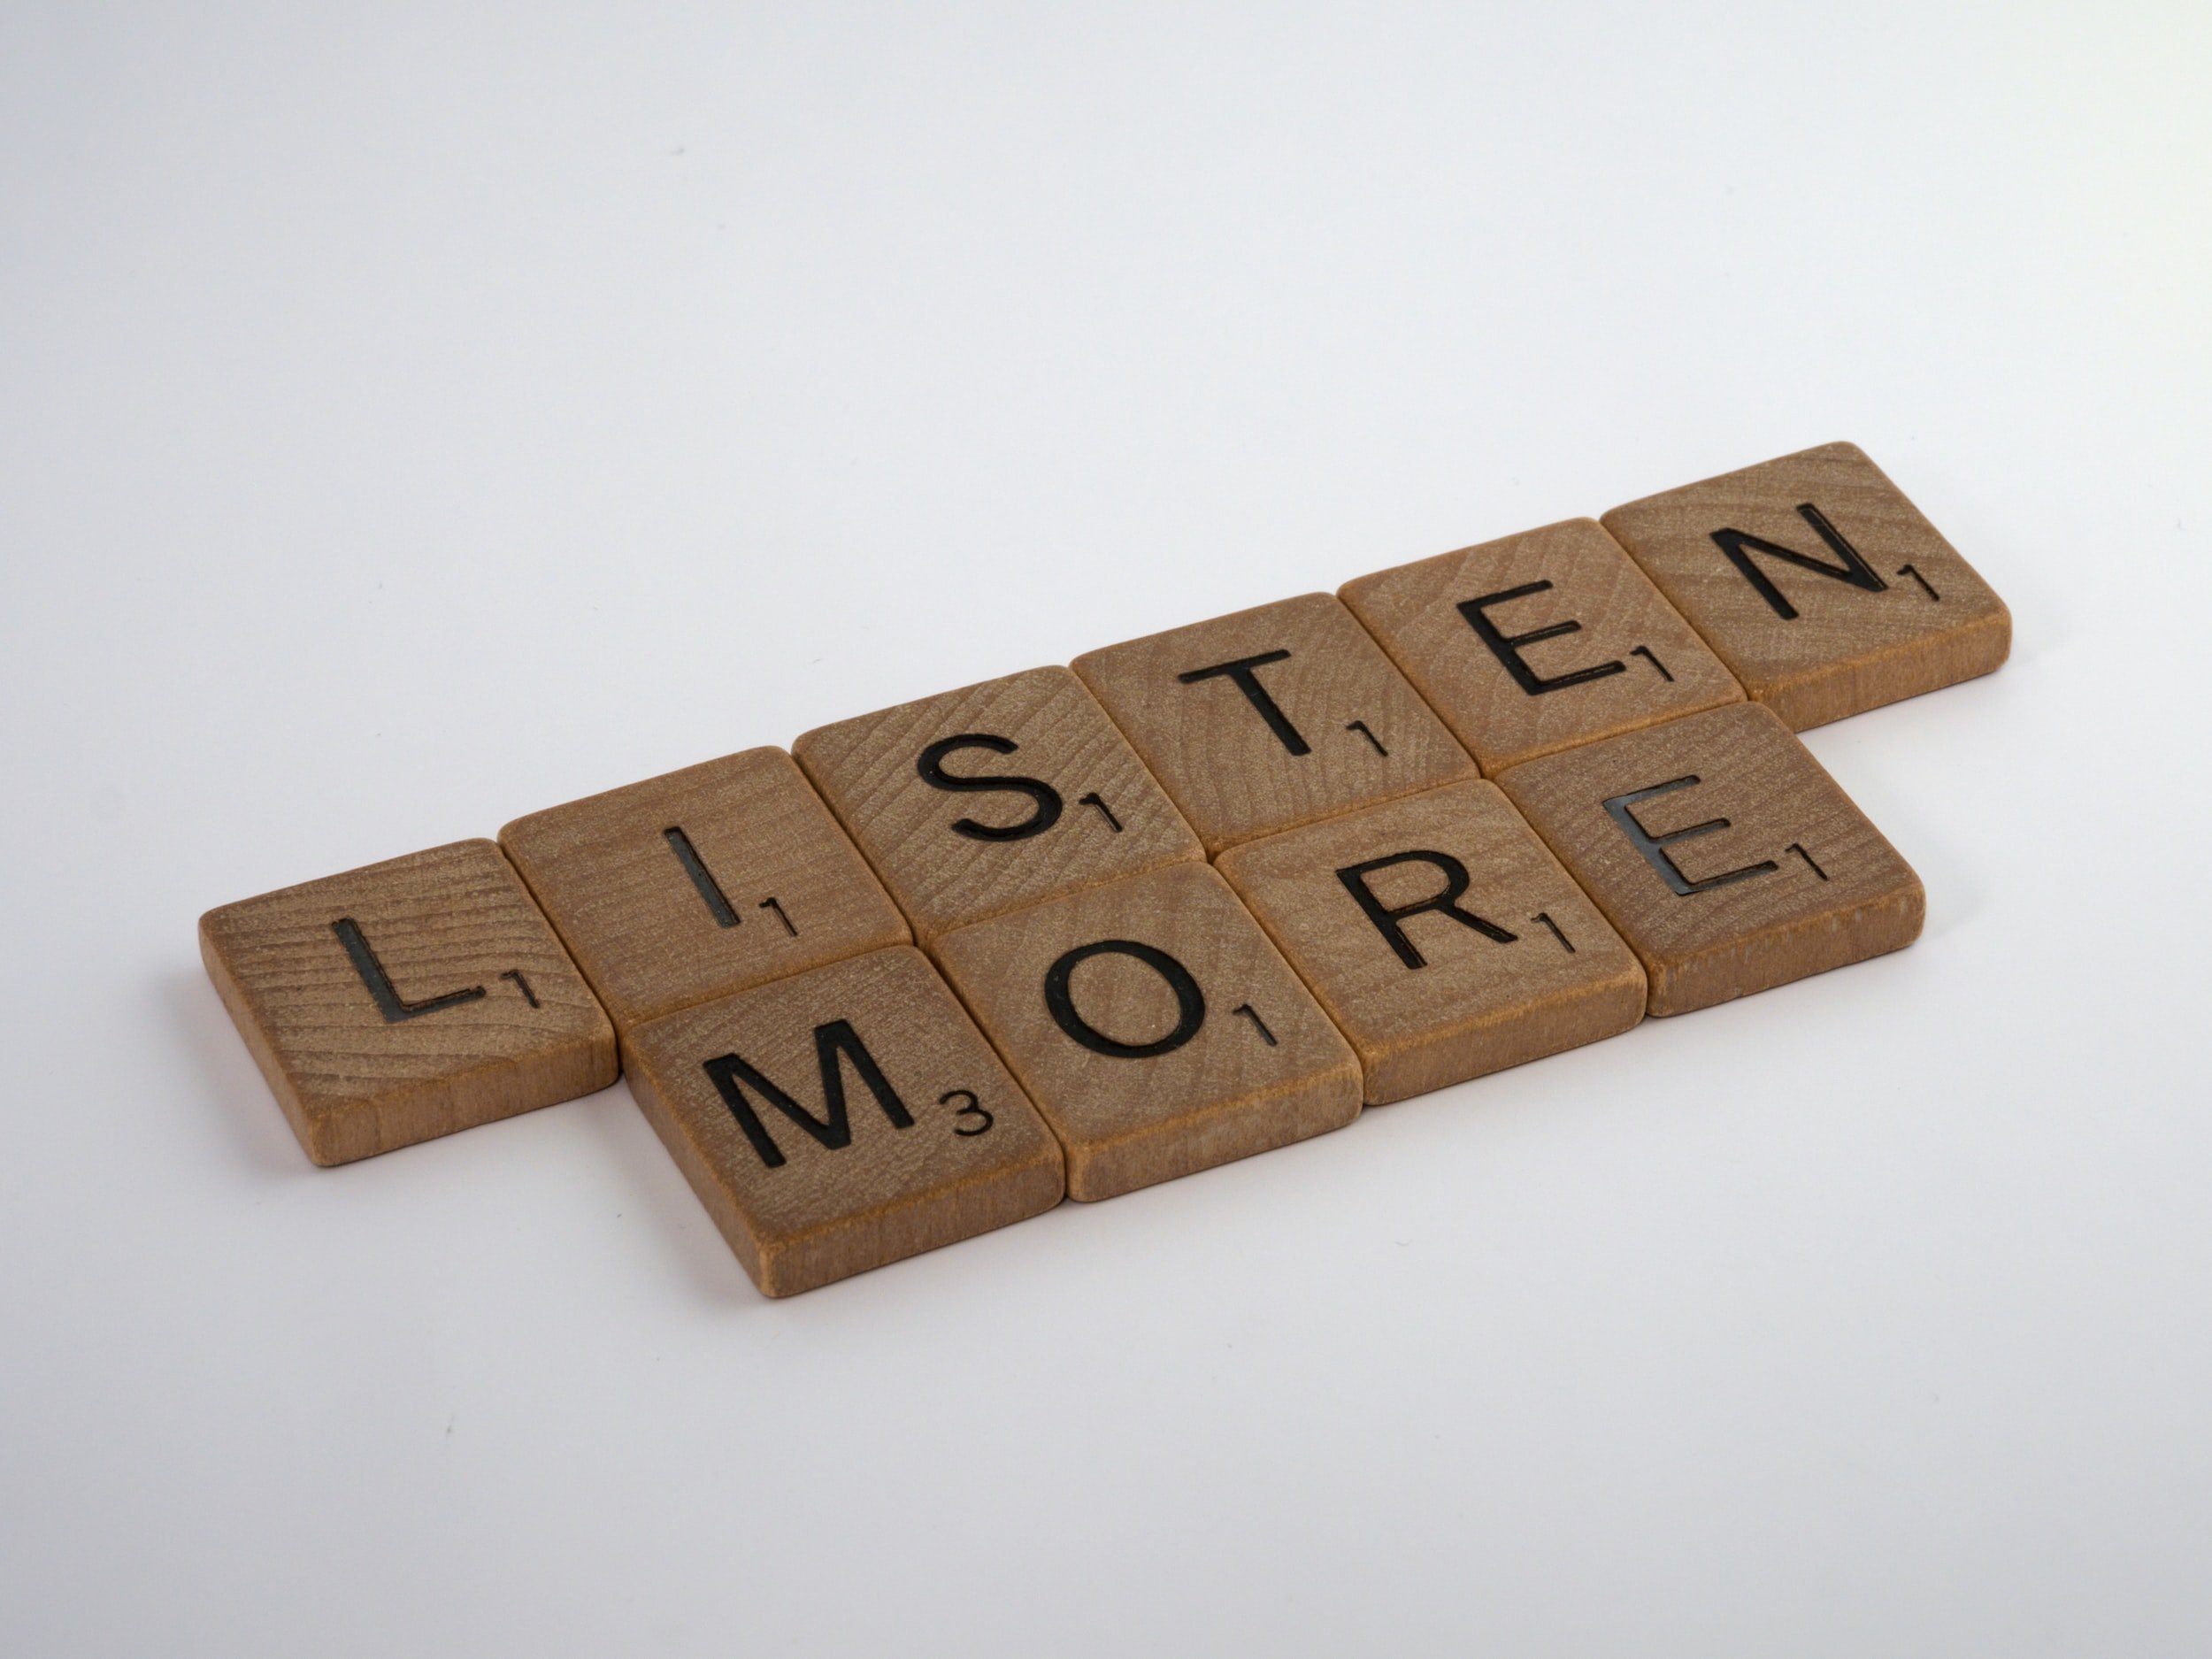 "Listen more" is written in wooden letter tiles.